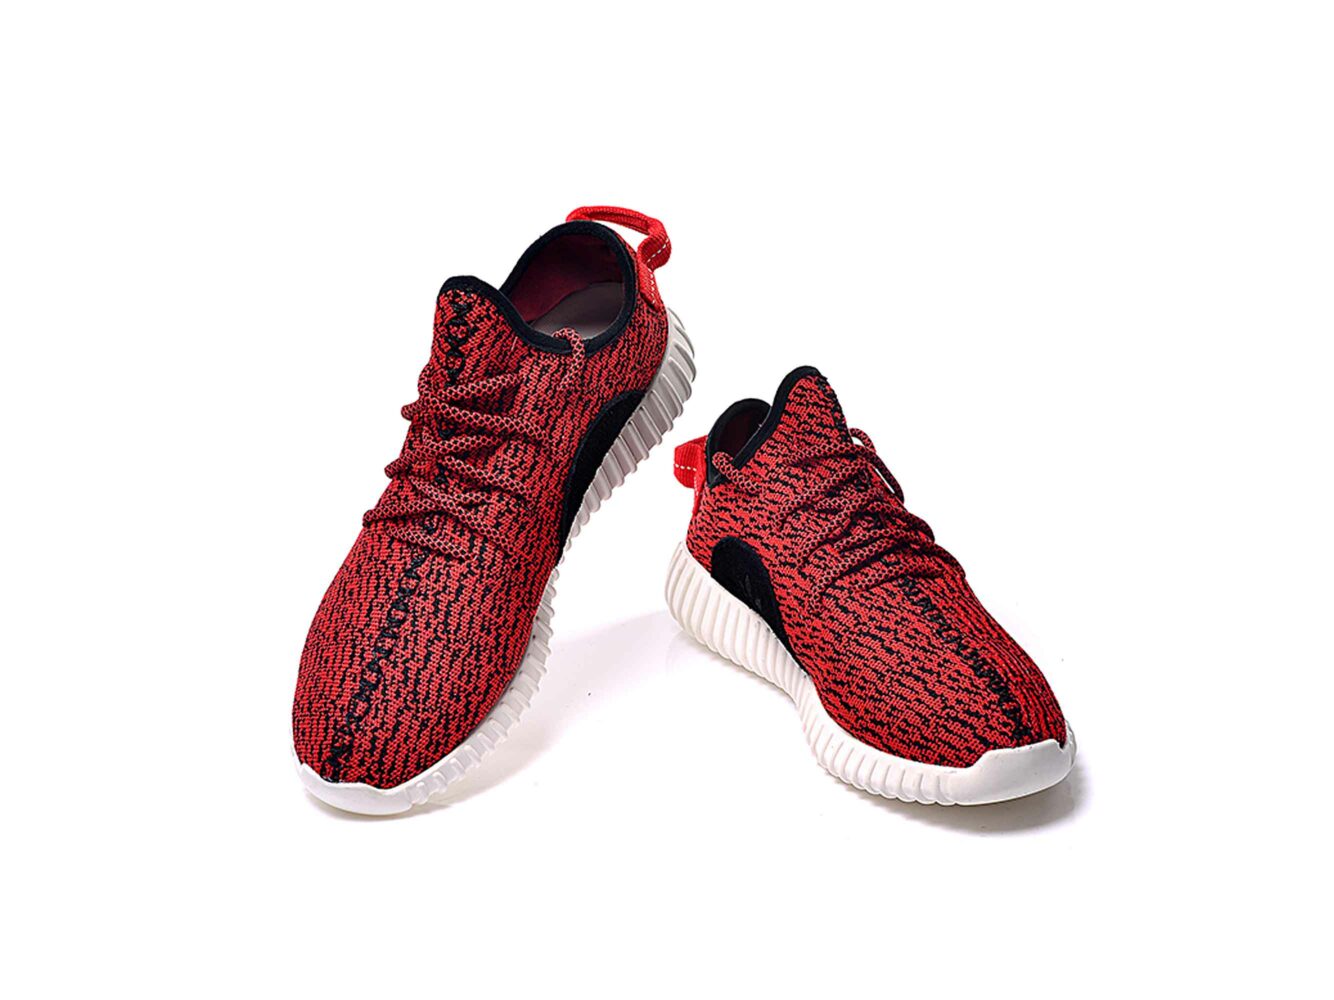 adidas yeezy 350 boost Kanye West red купить